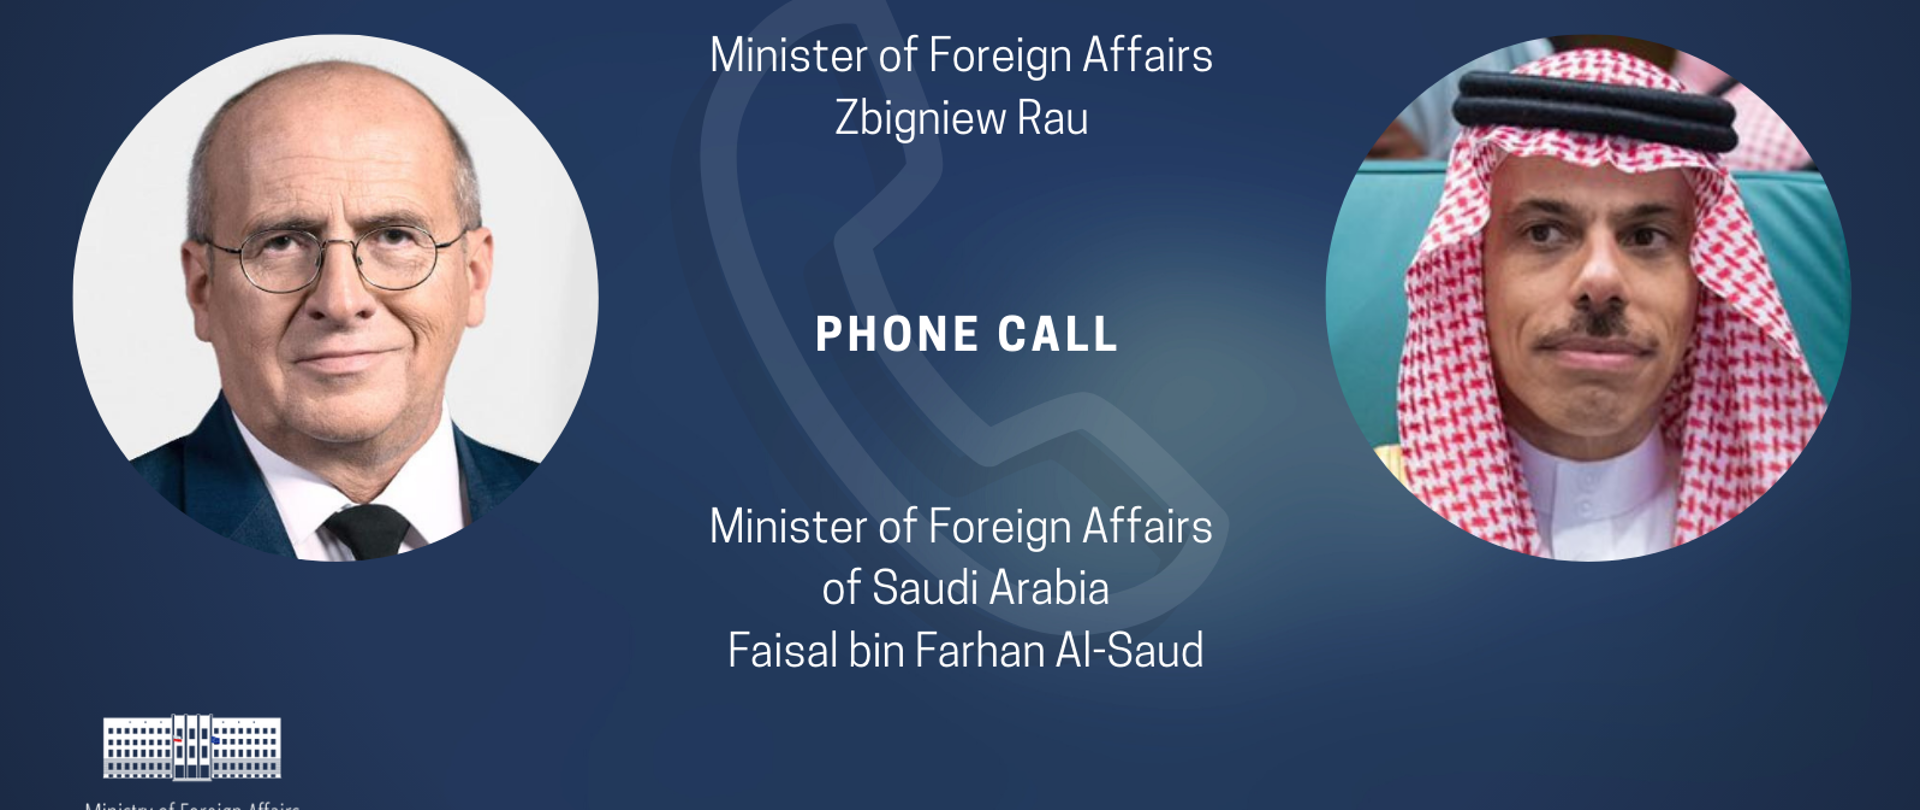 Phone call between chiefs of diplomacy of Poland and Saudi Arabia